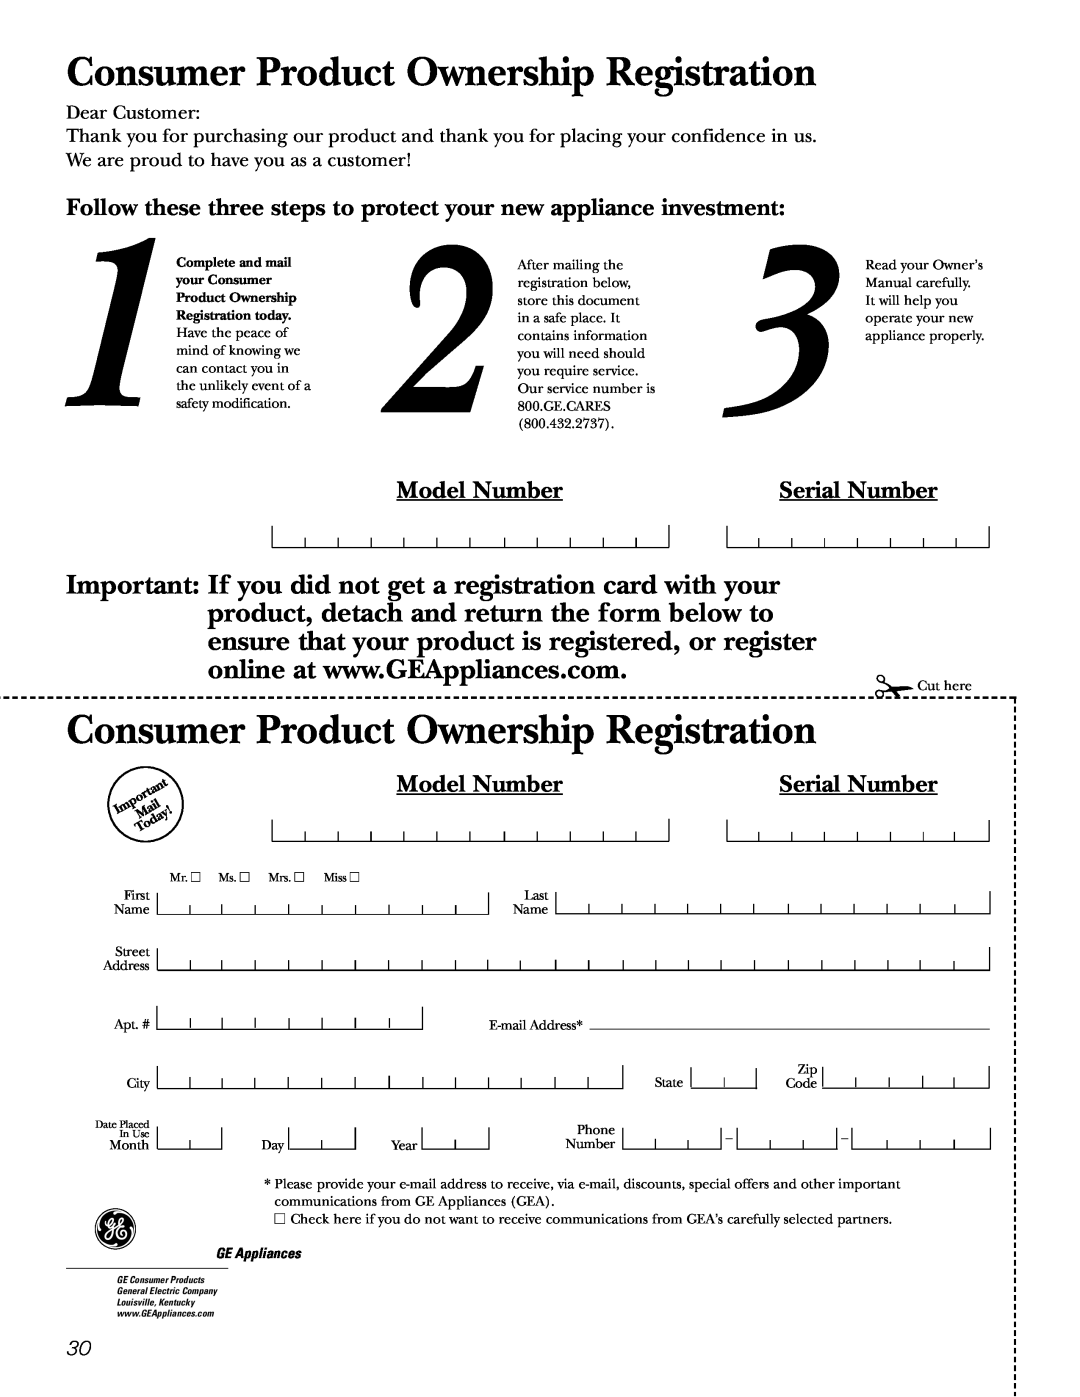 GE 25, 20, 22 manual Model Number, Serial Number, Consumer Product Ownership Registration, GE Appliances 